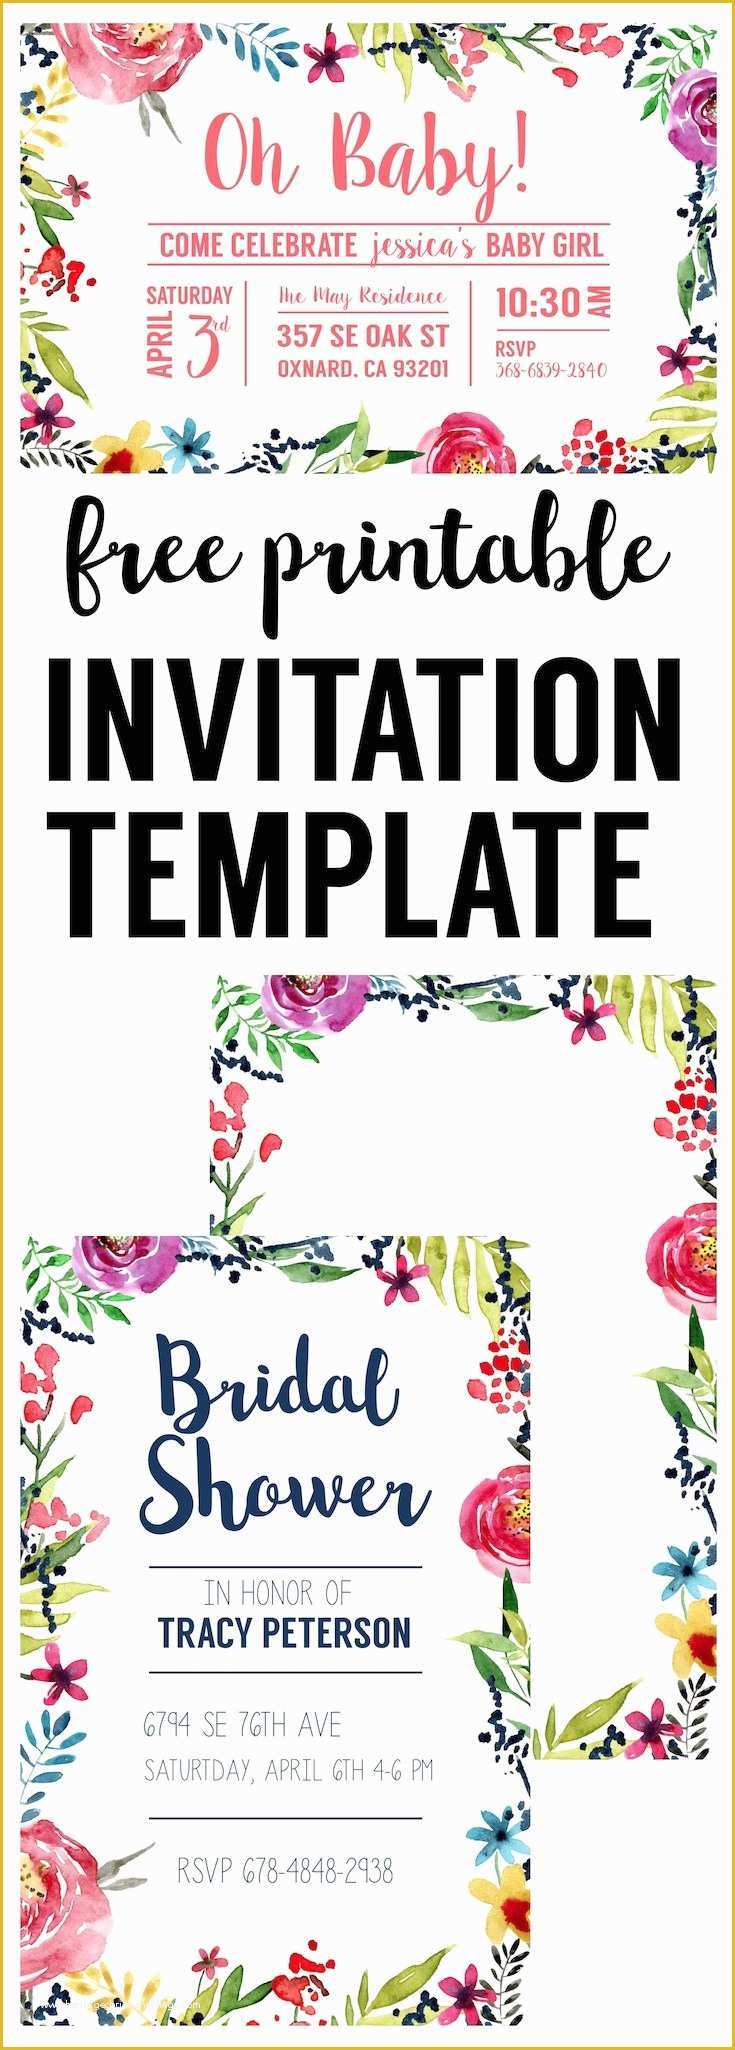 Border Invitation Templates Free Of Floral Borders Invitations Free Printable Invitation